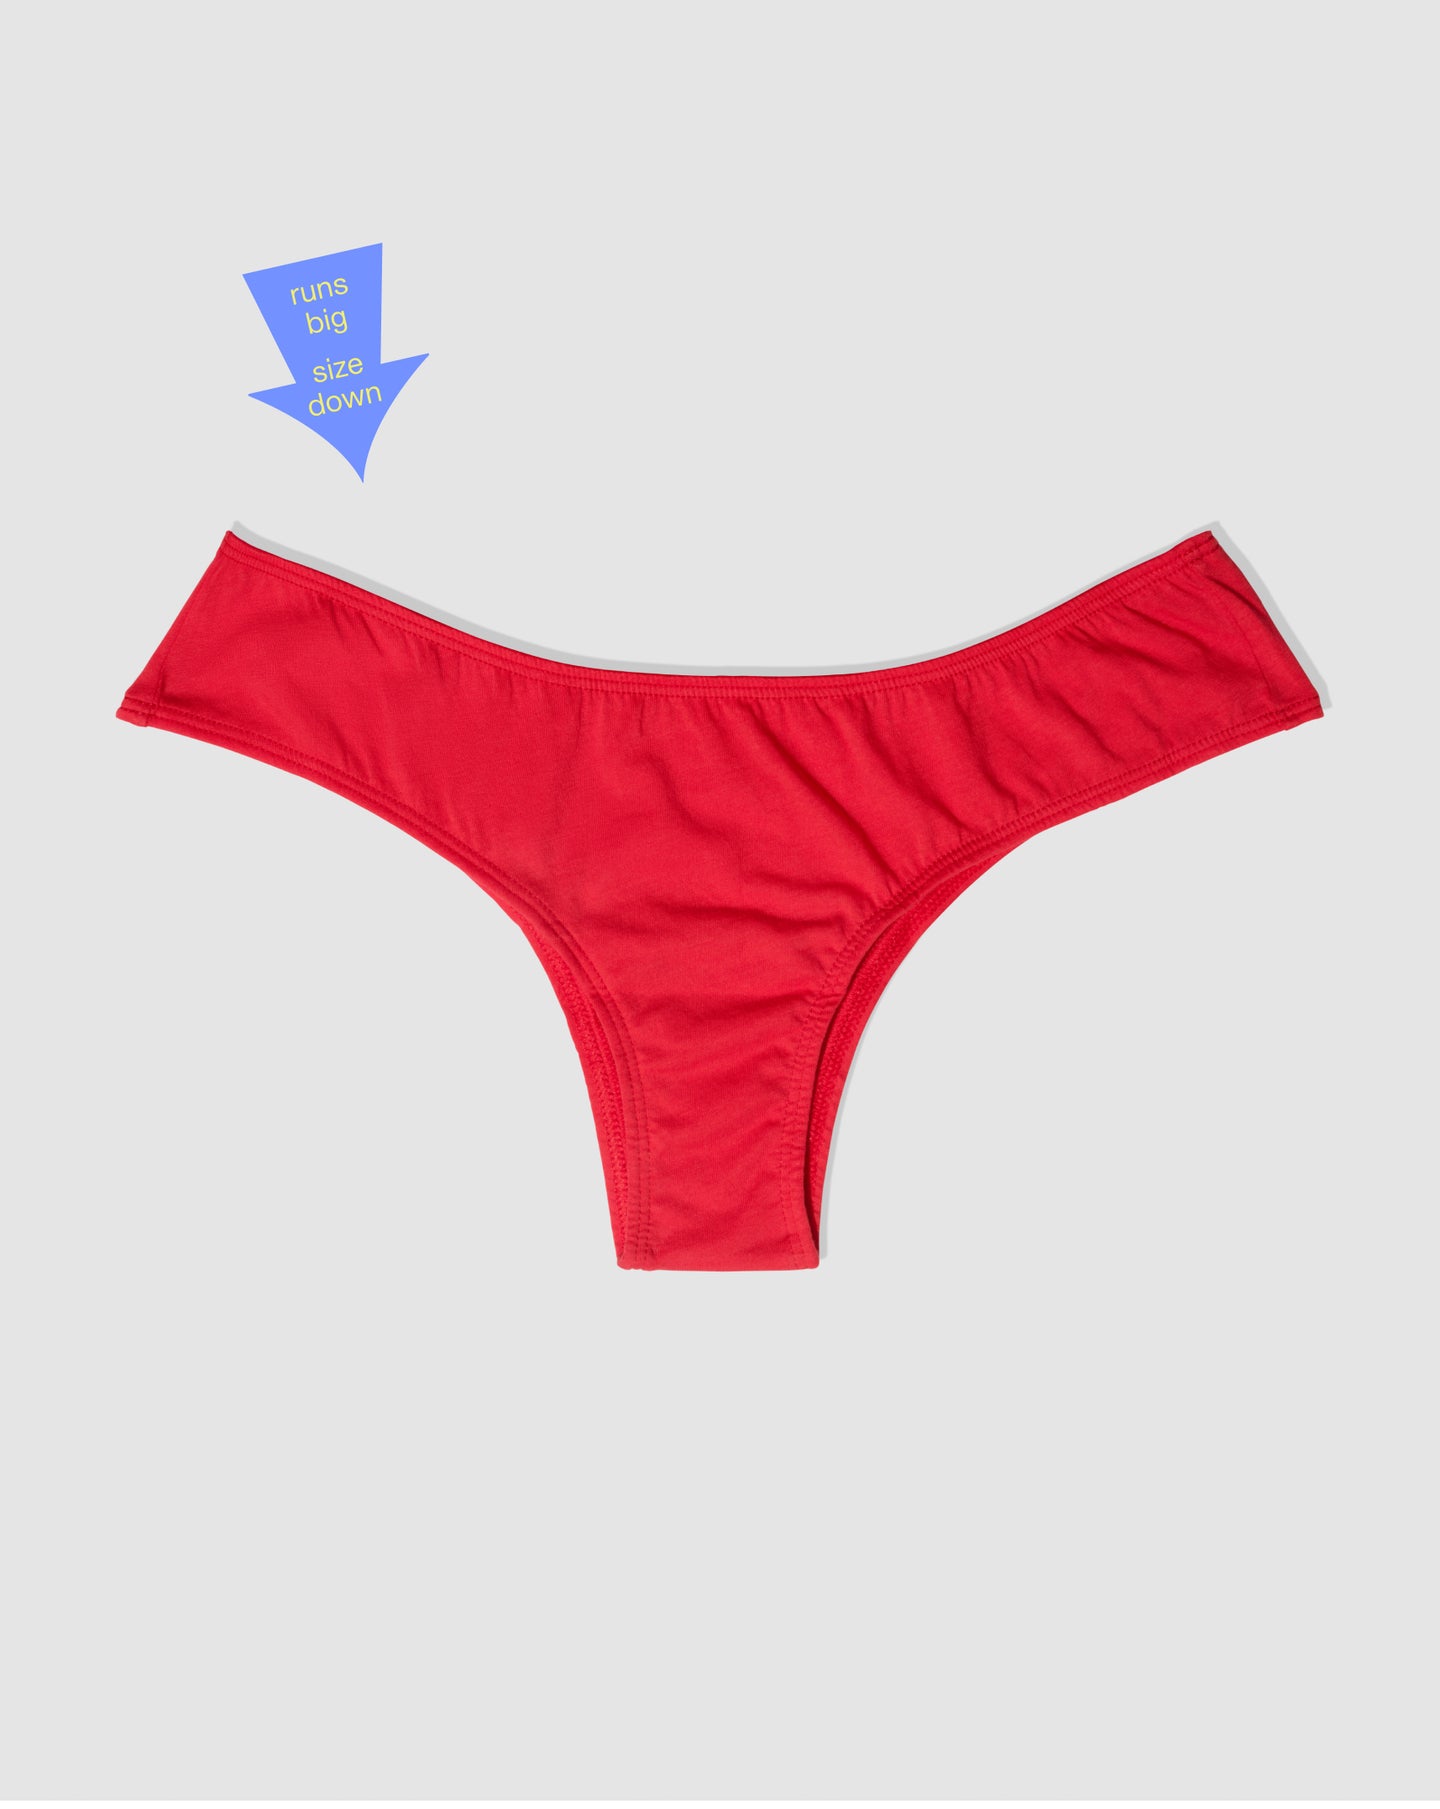 Gain Giogio 100% organic cotton bra underwear, hip-covered panties